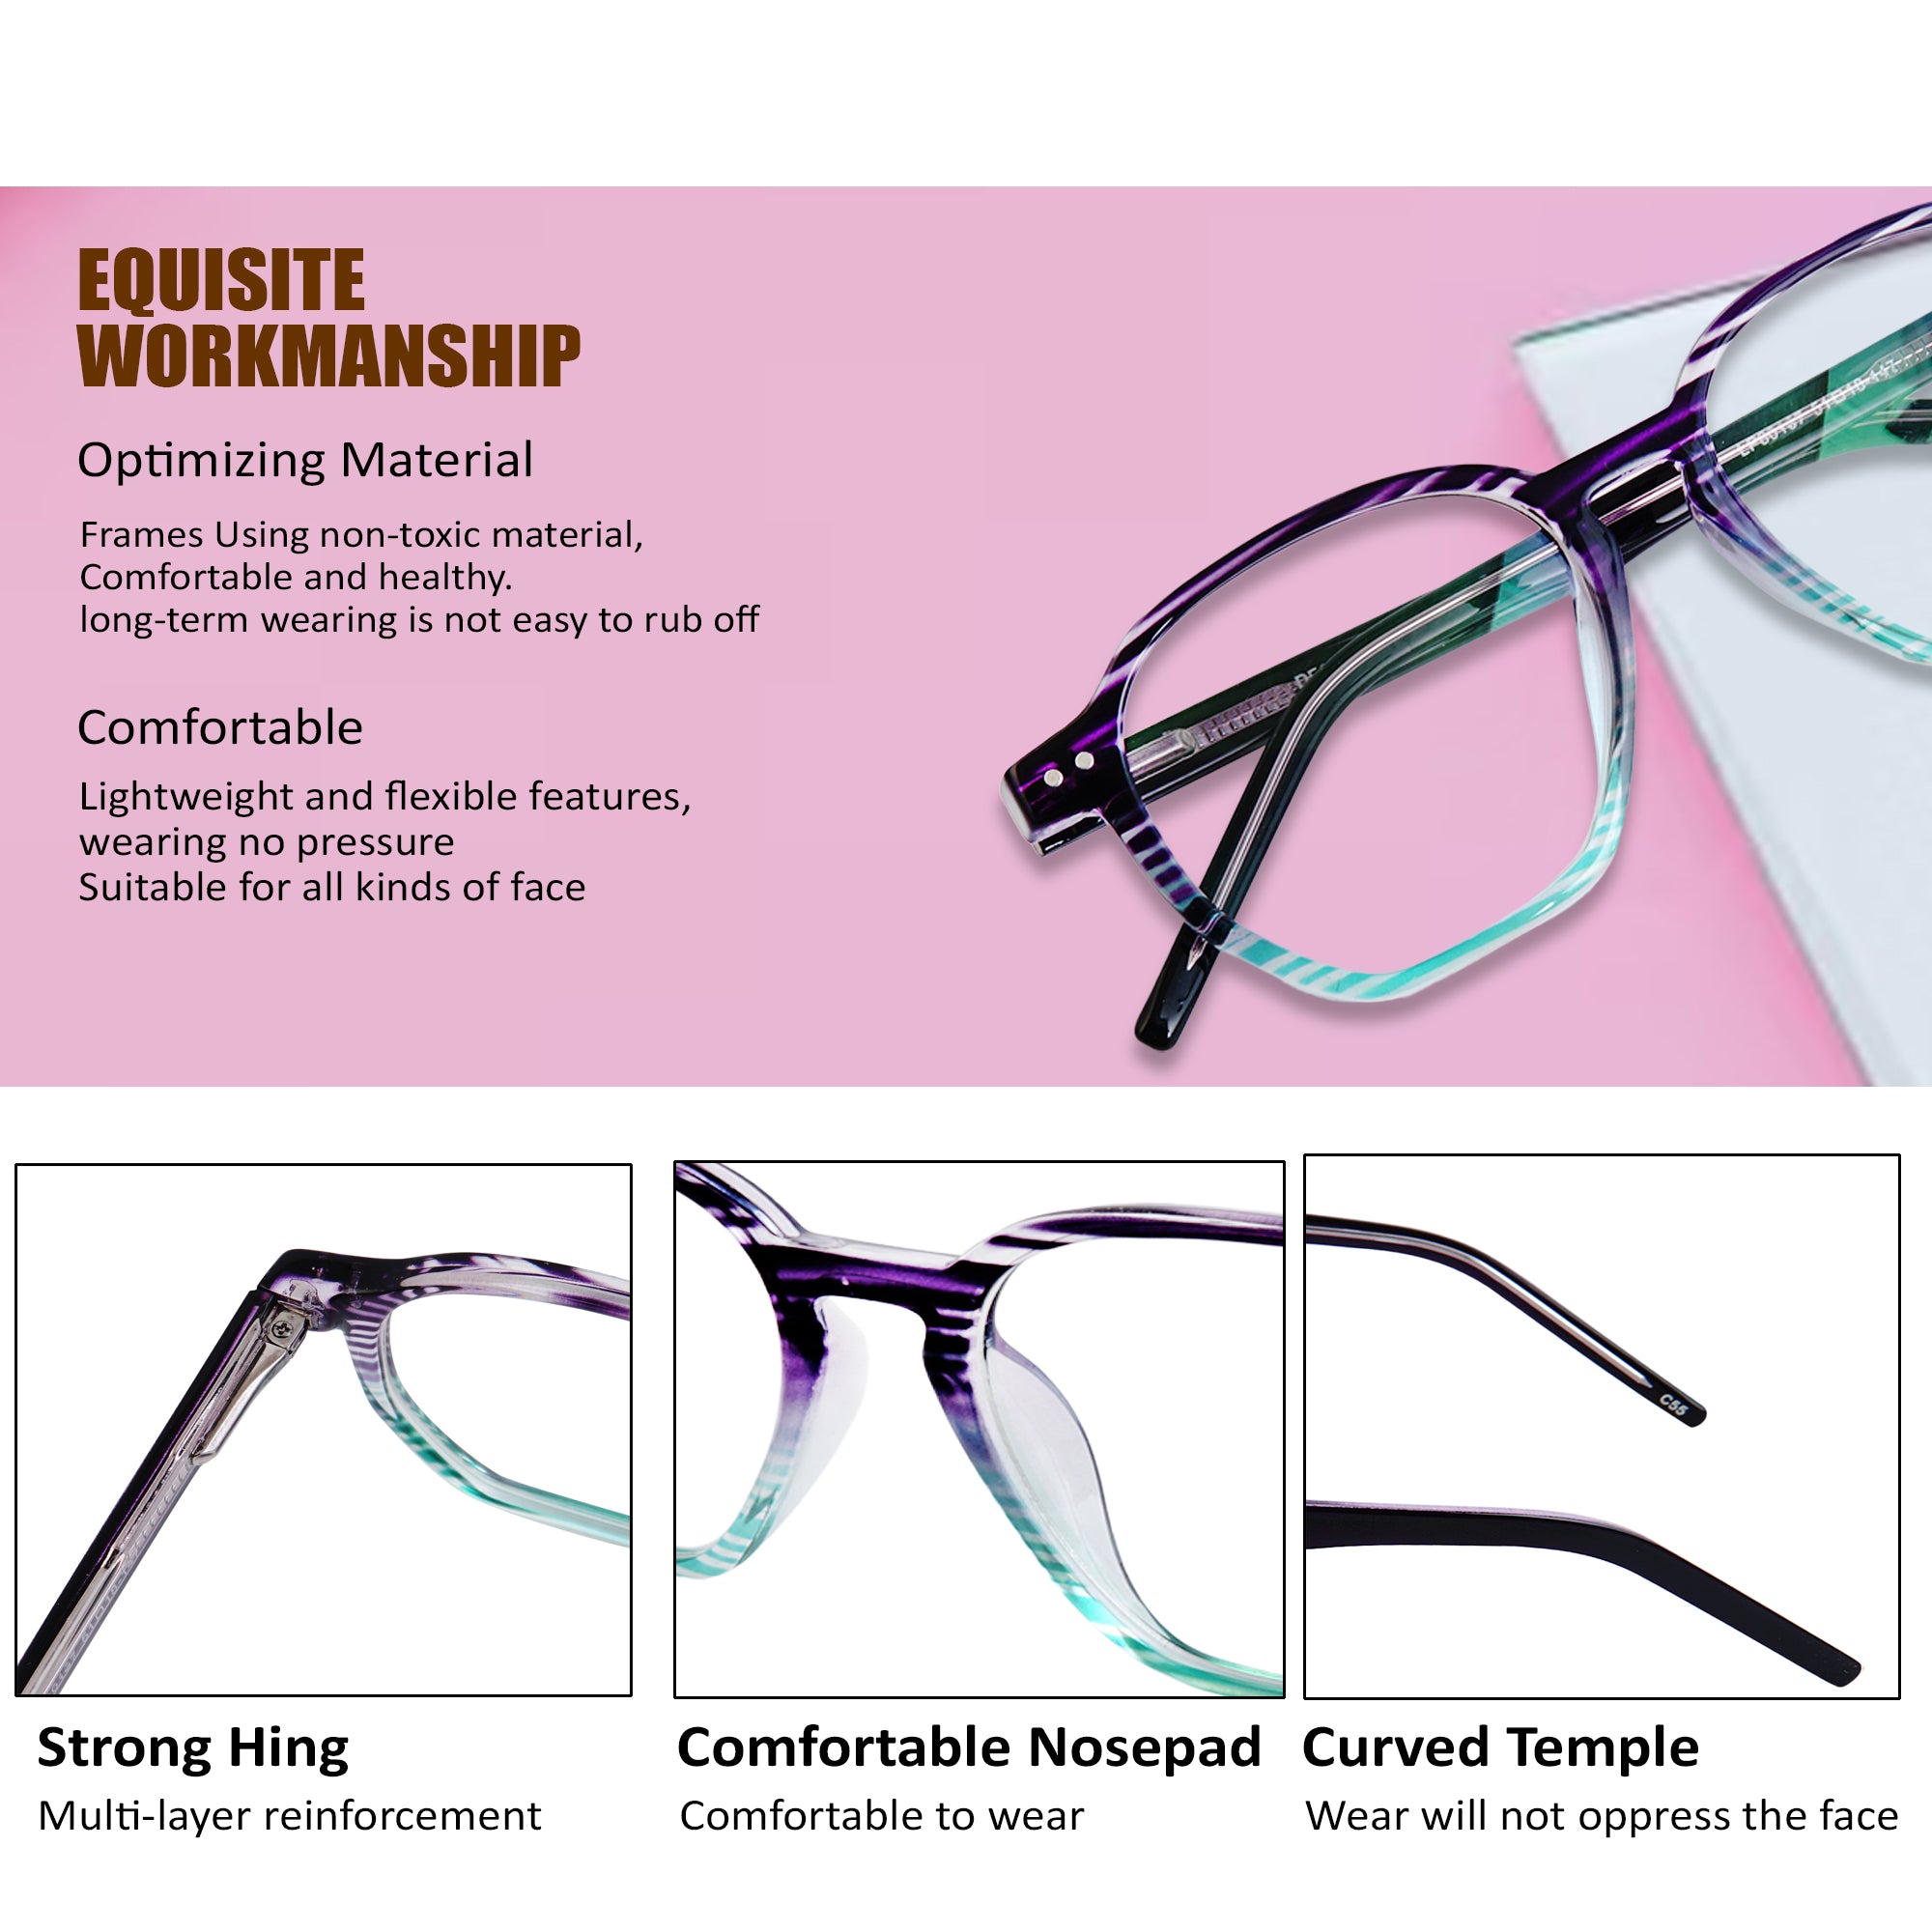 TORTOISE Cateye Rimmed Eyeglasses - L80167